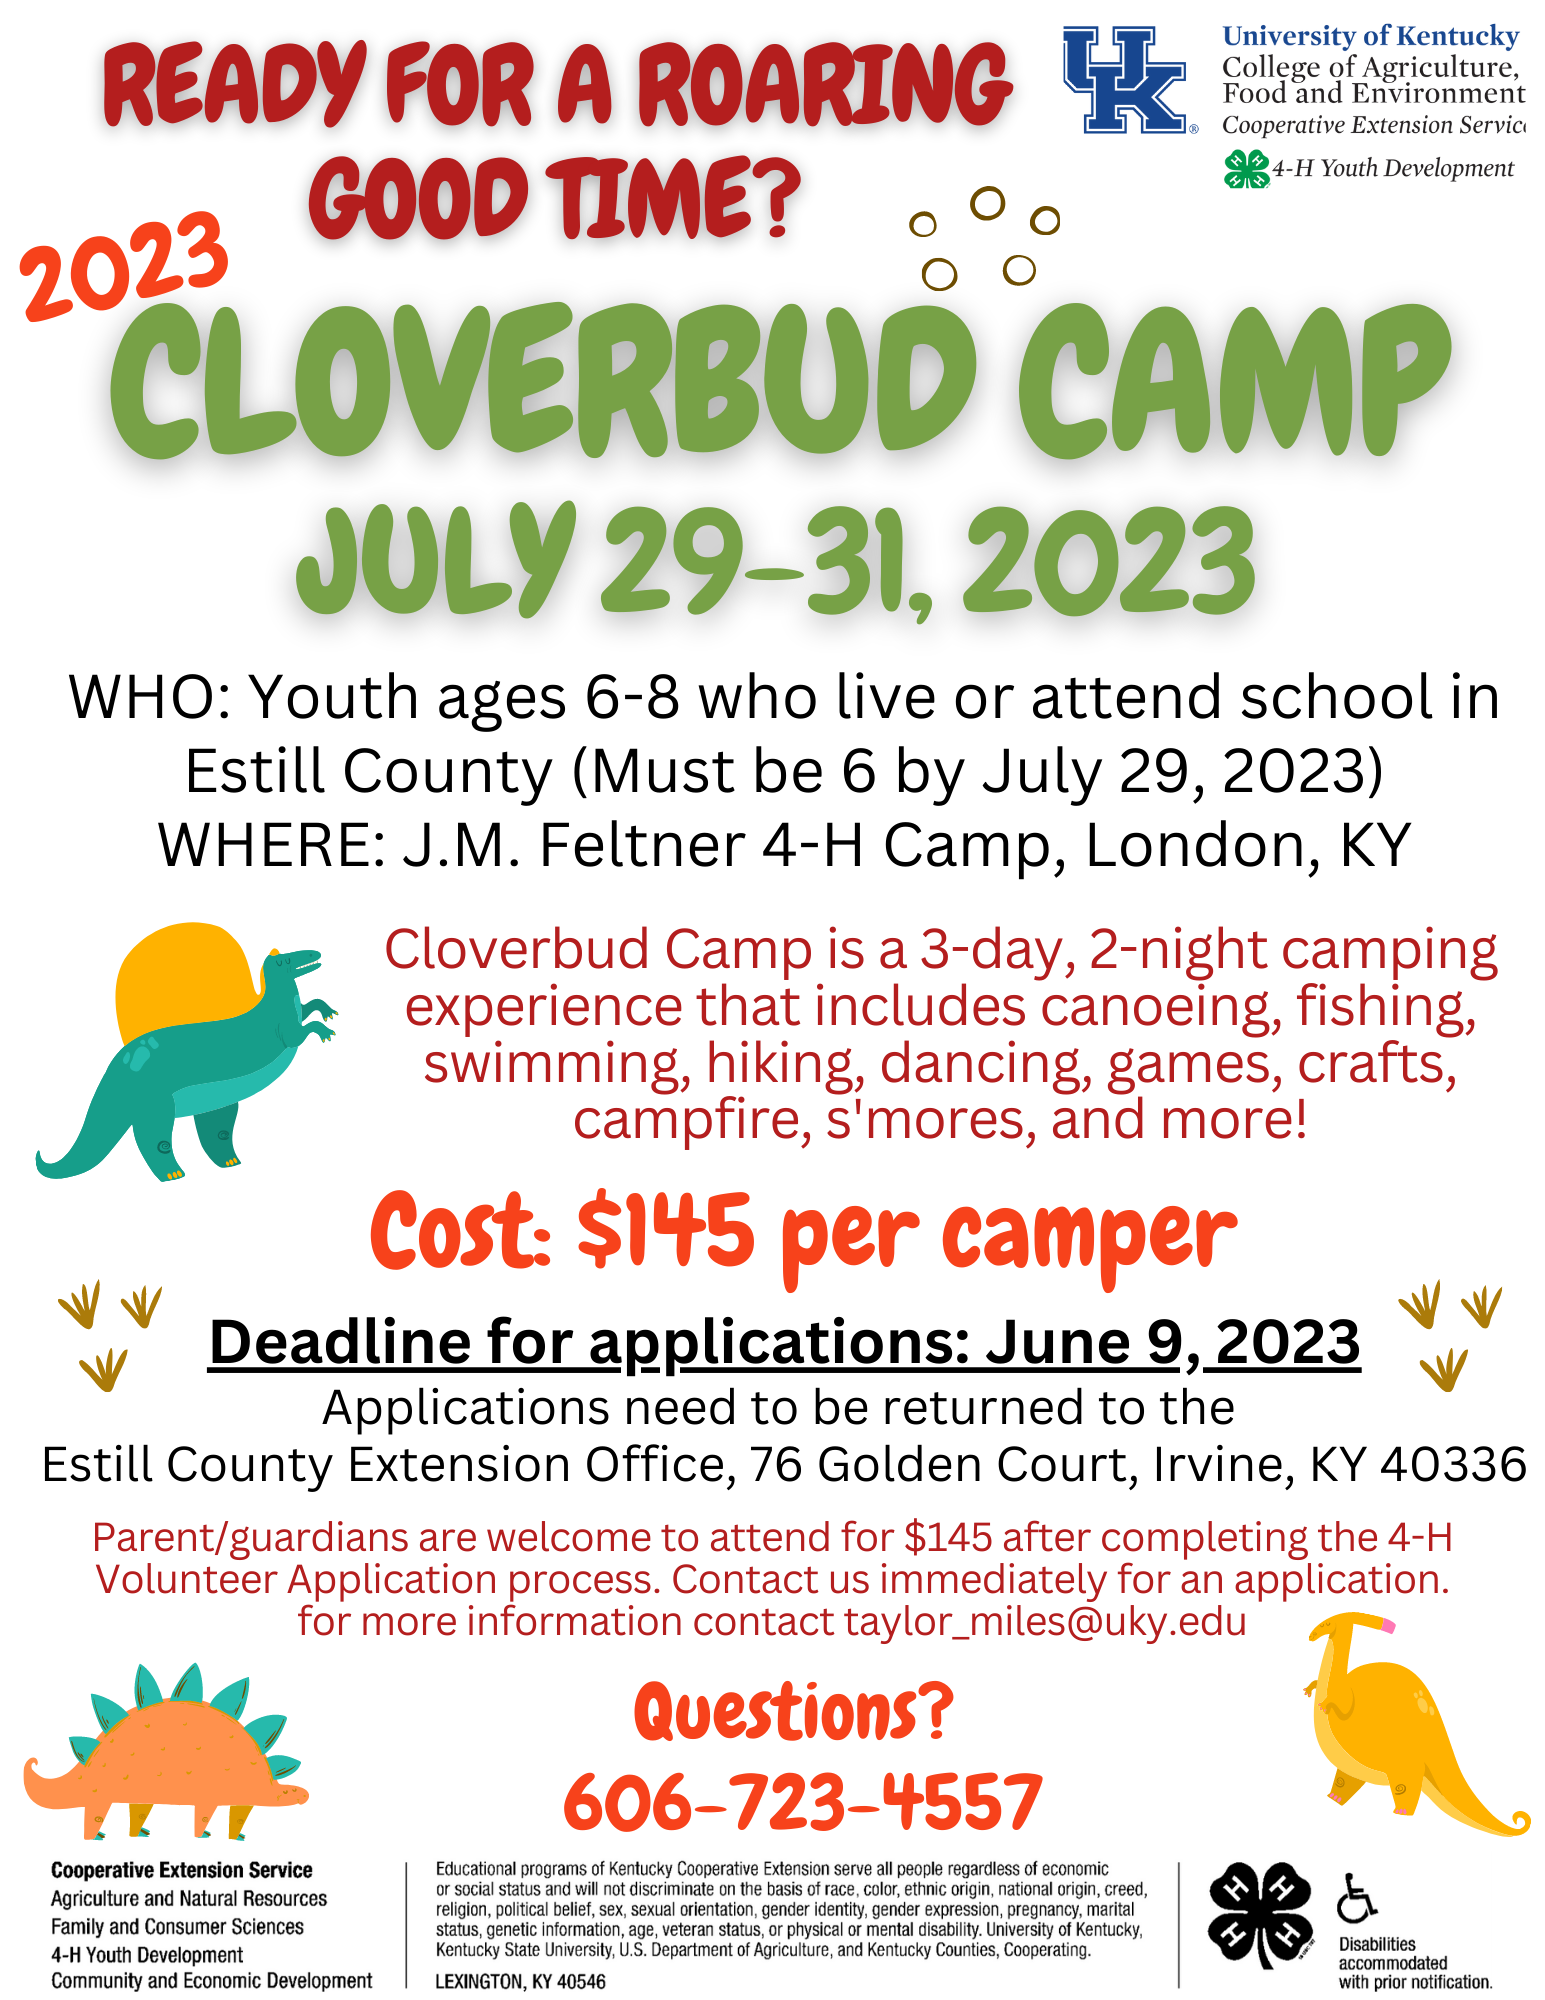 2023 4-H Summer Cloverbud Camp informational flyer